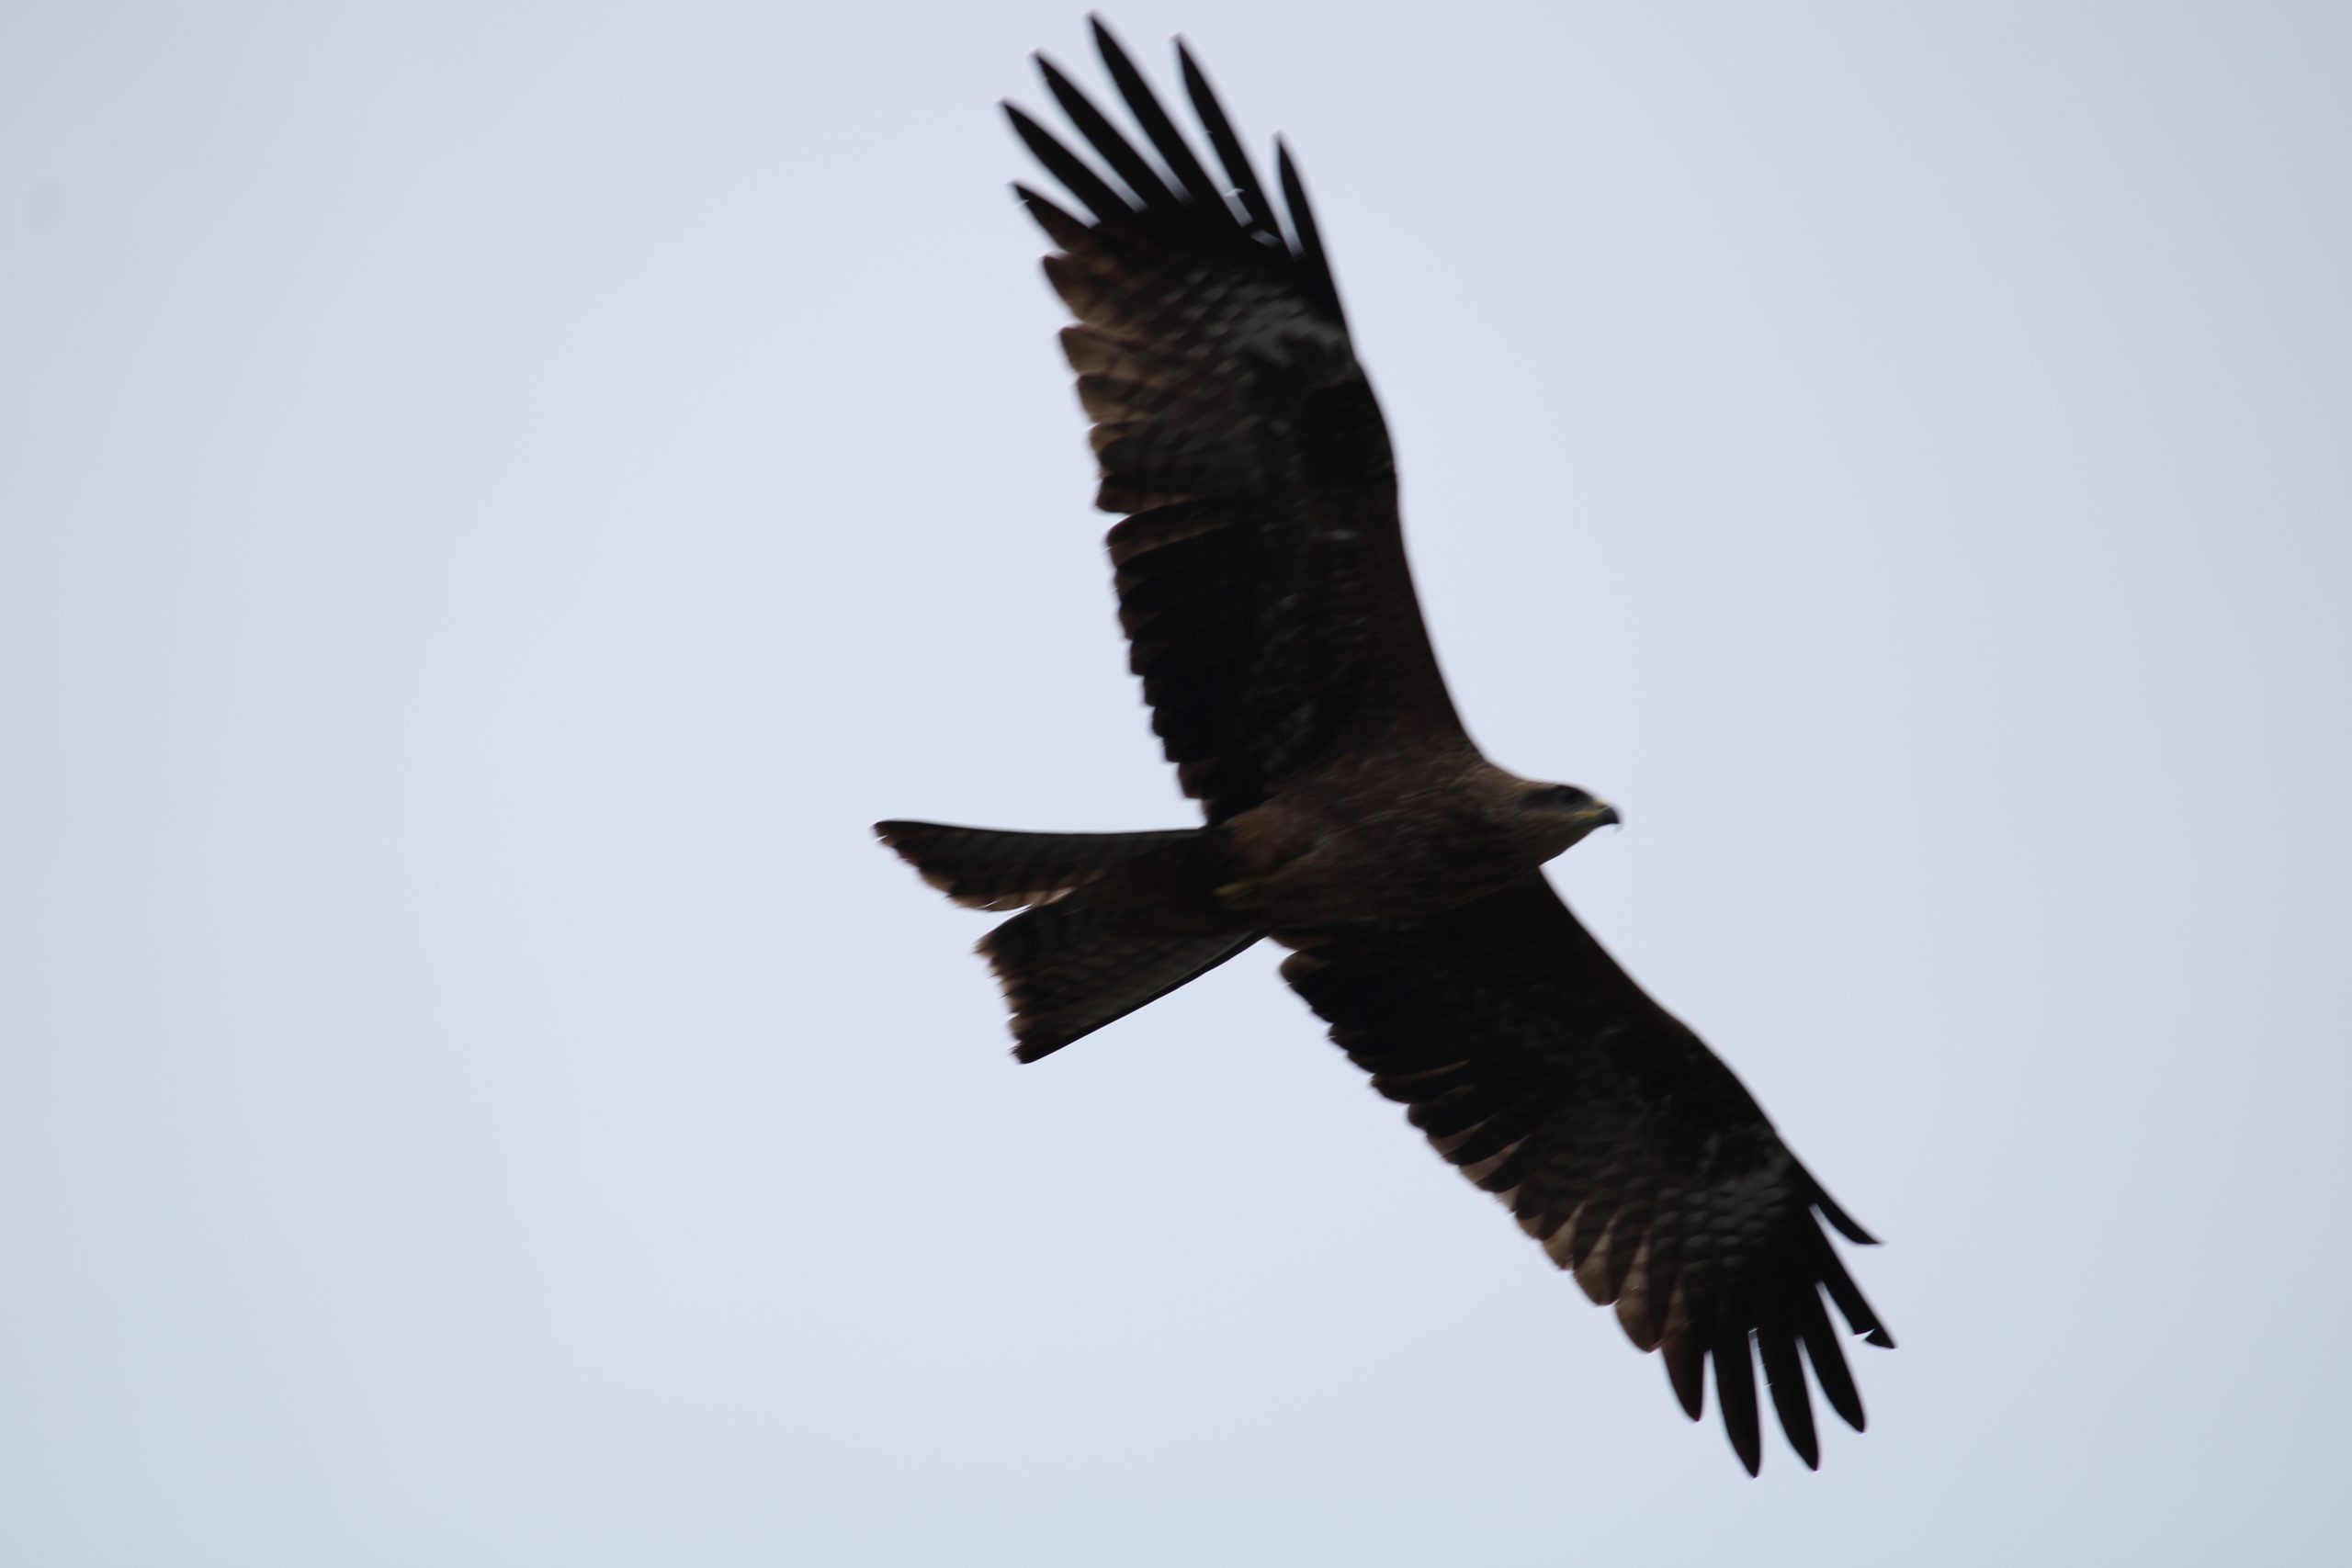 A flying eagle